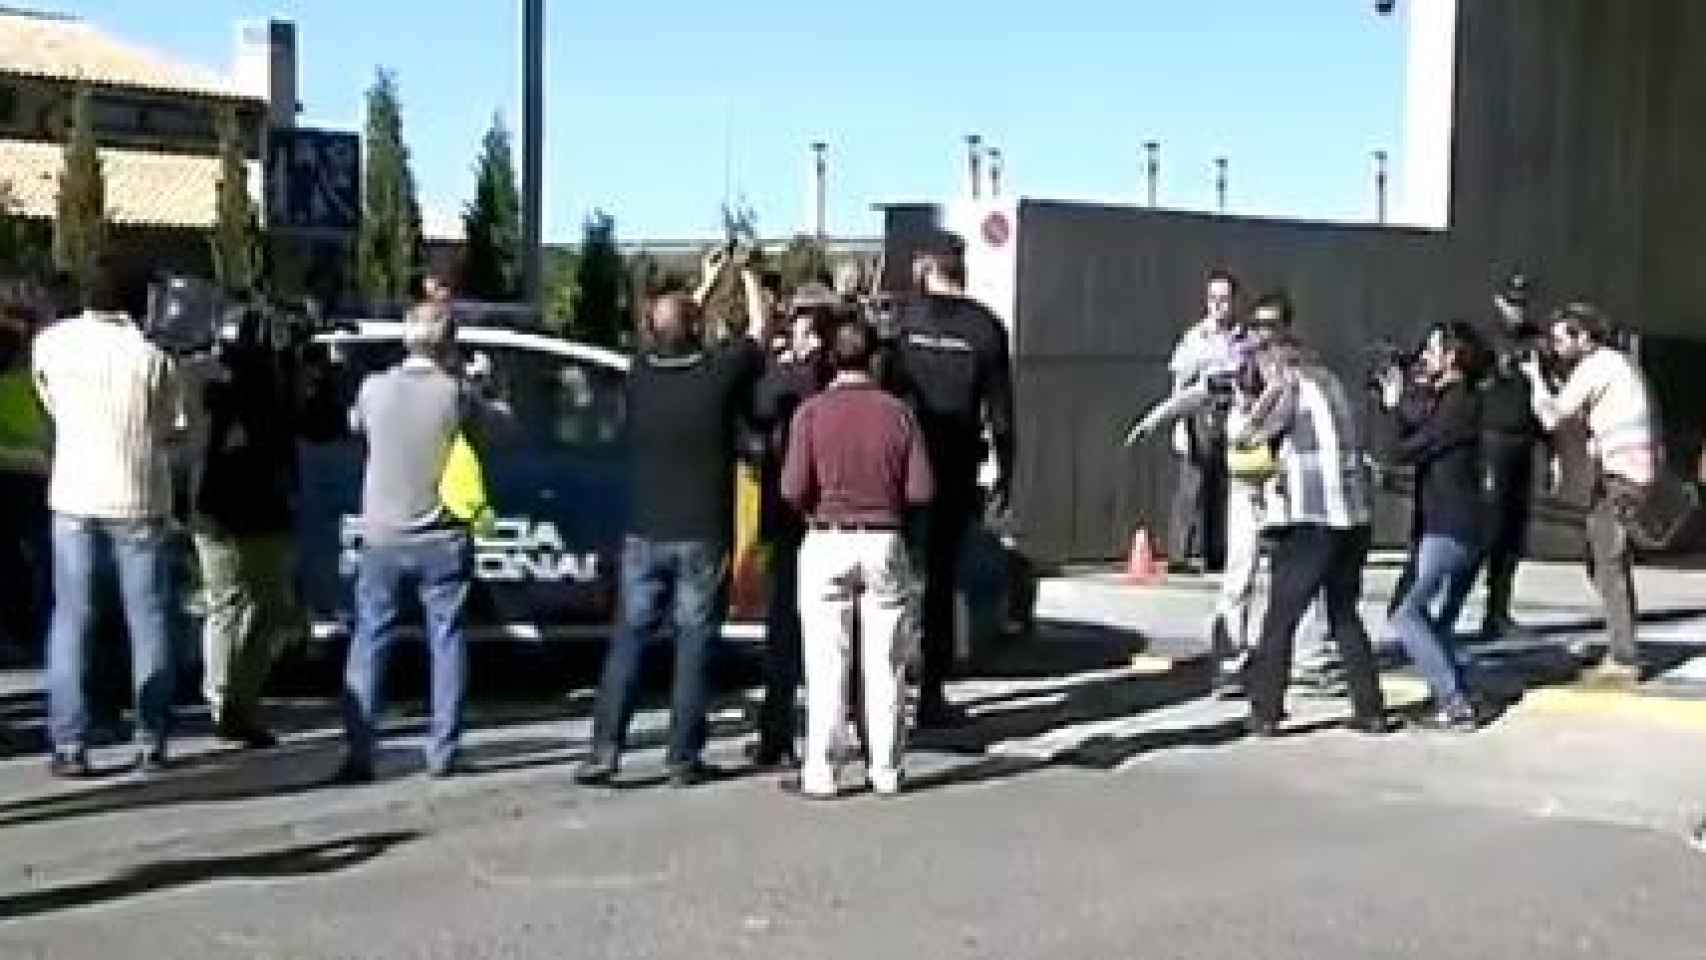 Llegada de los detenidos al juzgado de Huesca para declarar. Foto: Twitter (@aragontv)